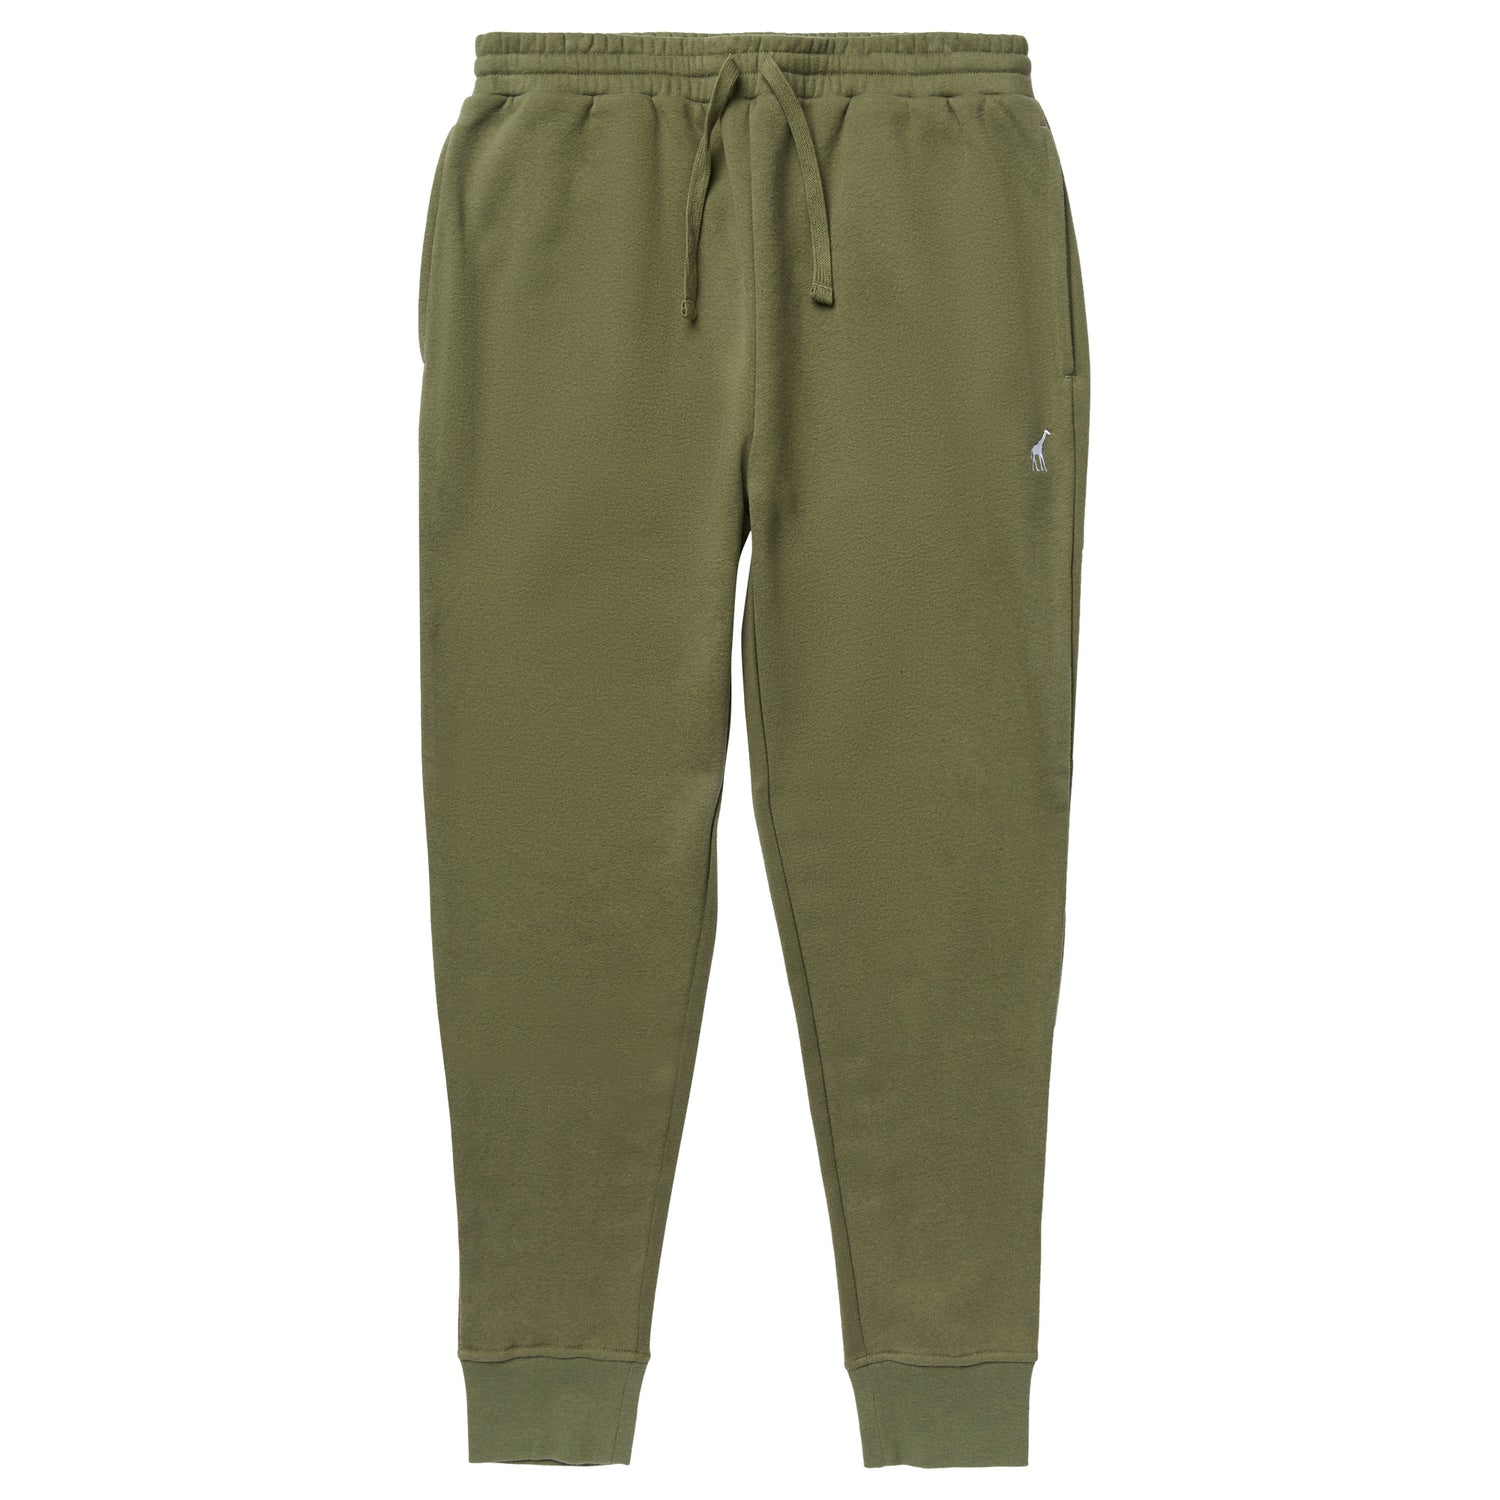 Cotton Green Joggers Olive Green Jogging Pants Green Sweatpants